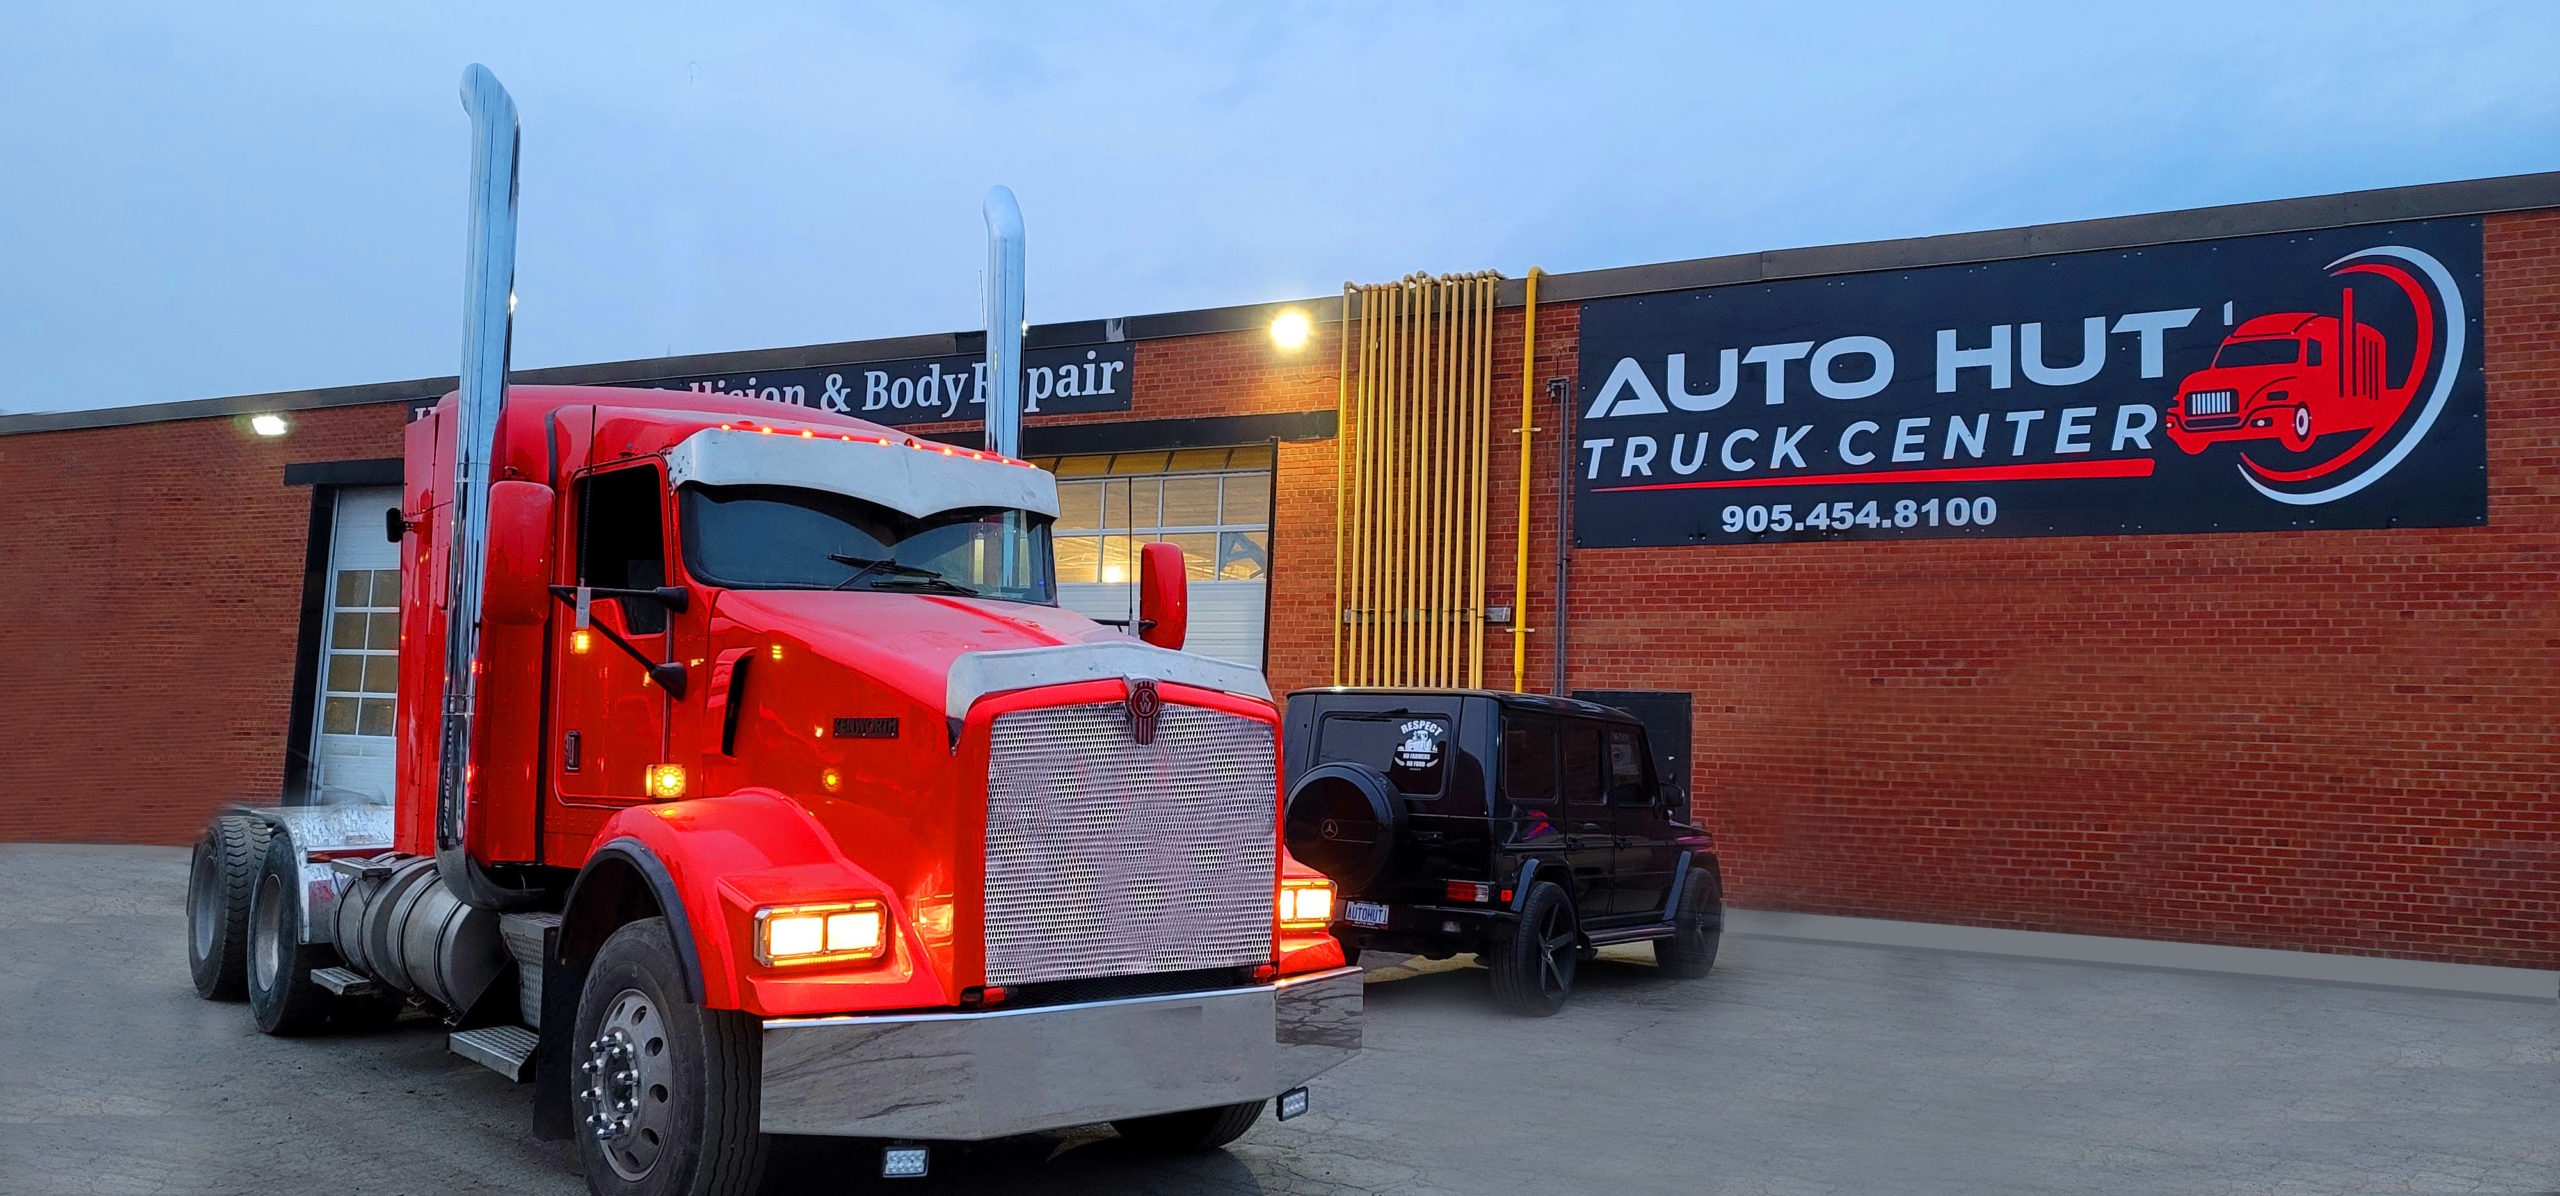 Truck body Shop